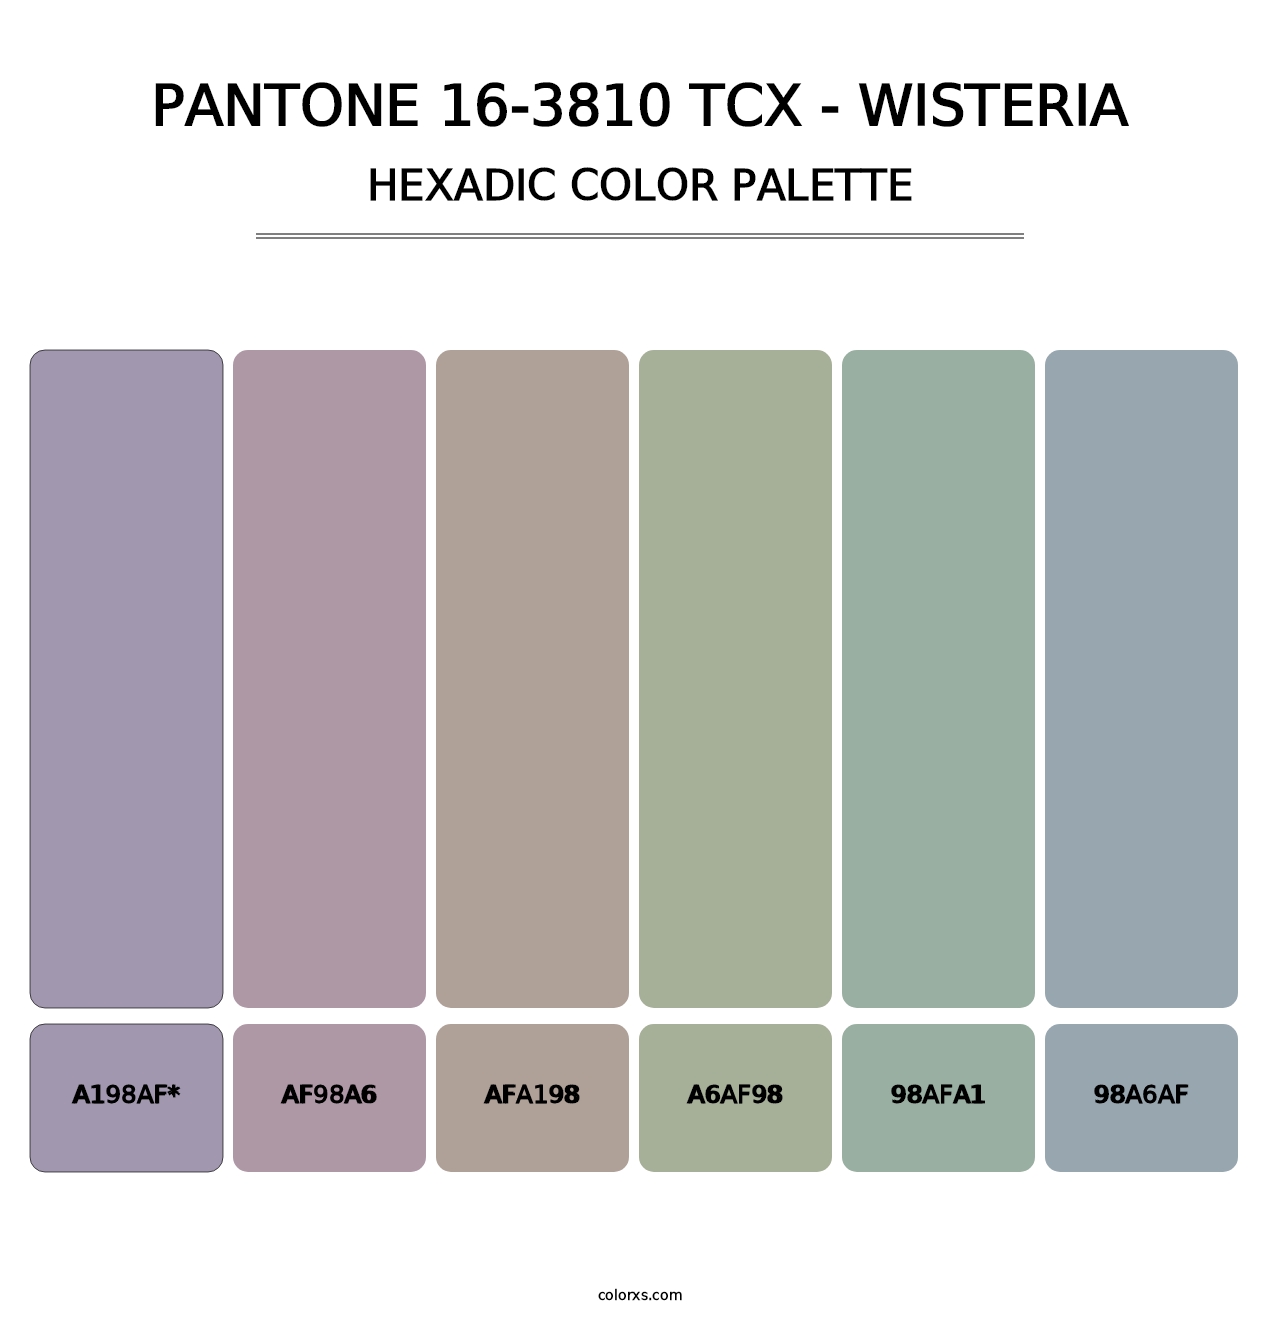 PANTONE 16-3810 TCX - Wisteria - Hexadic Color Palette